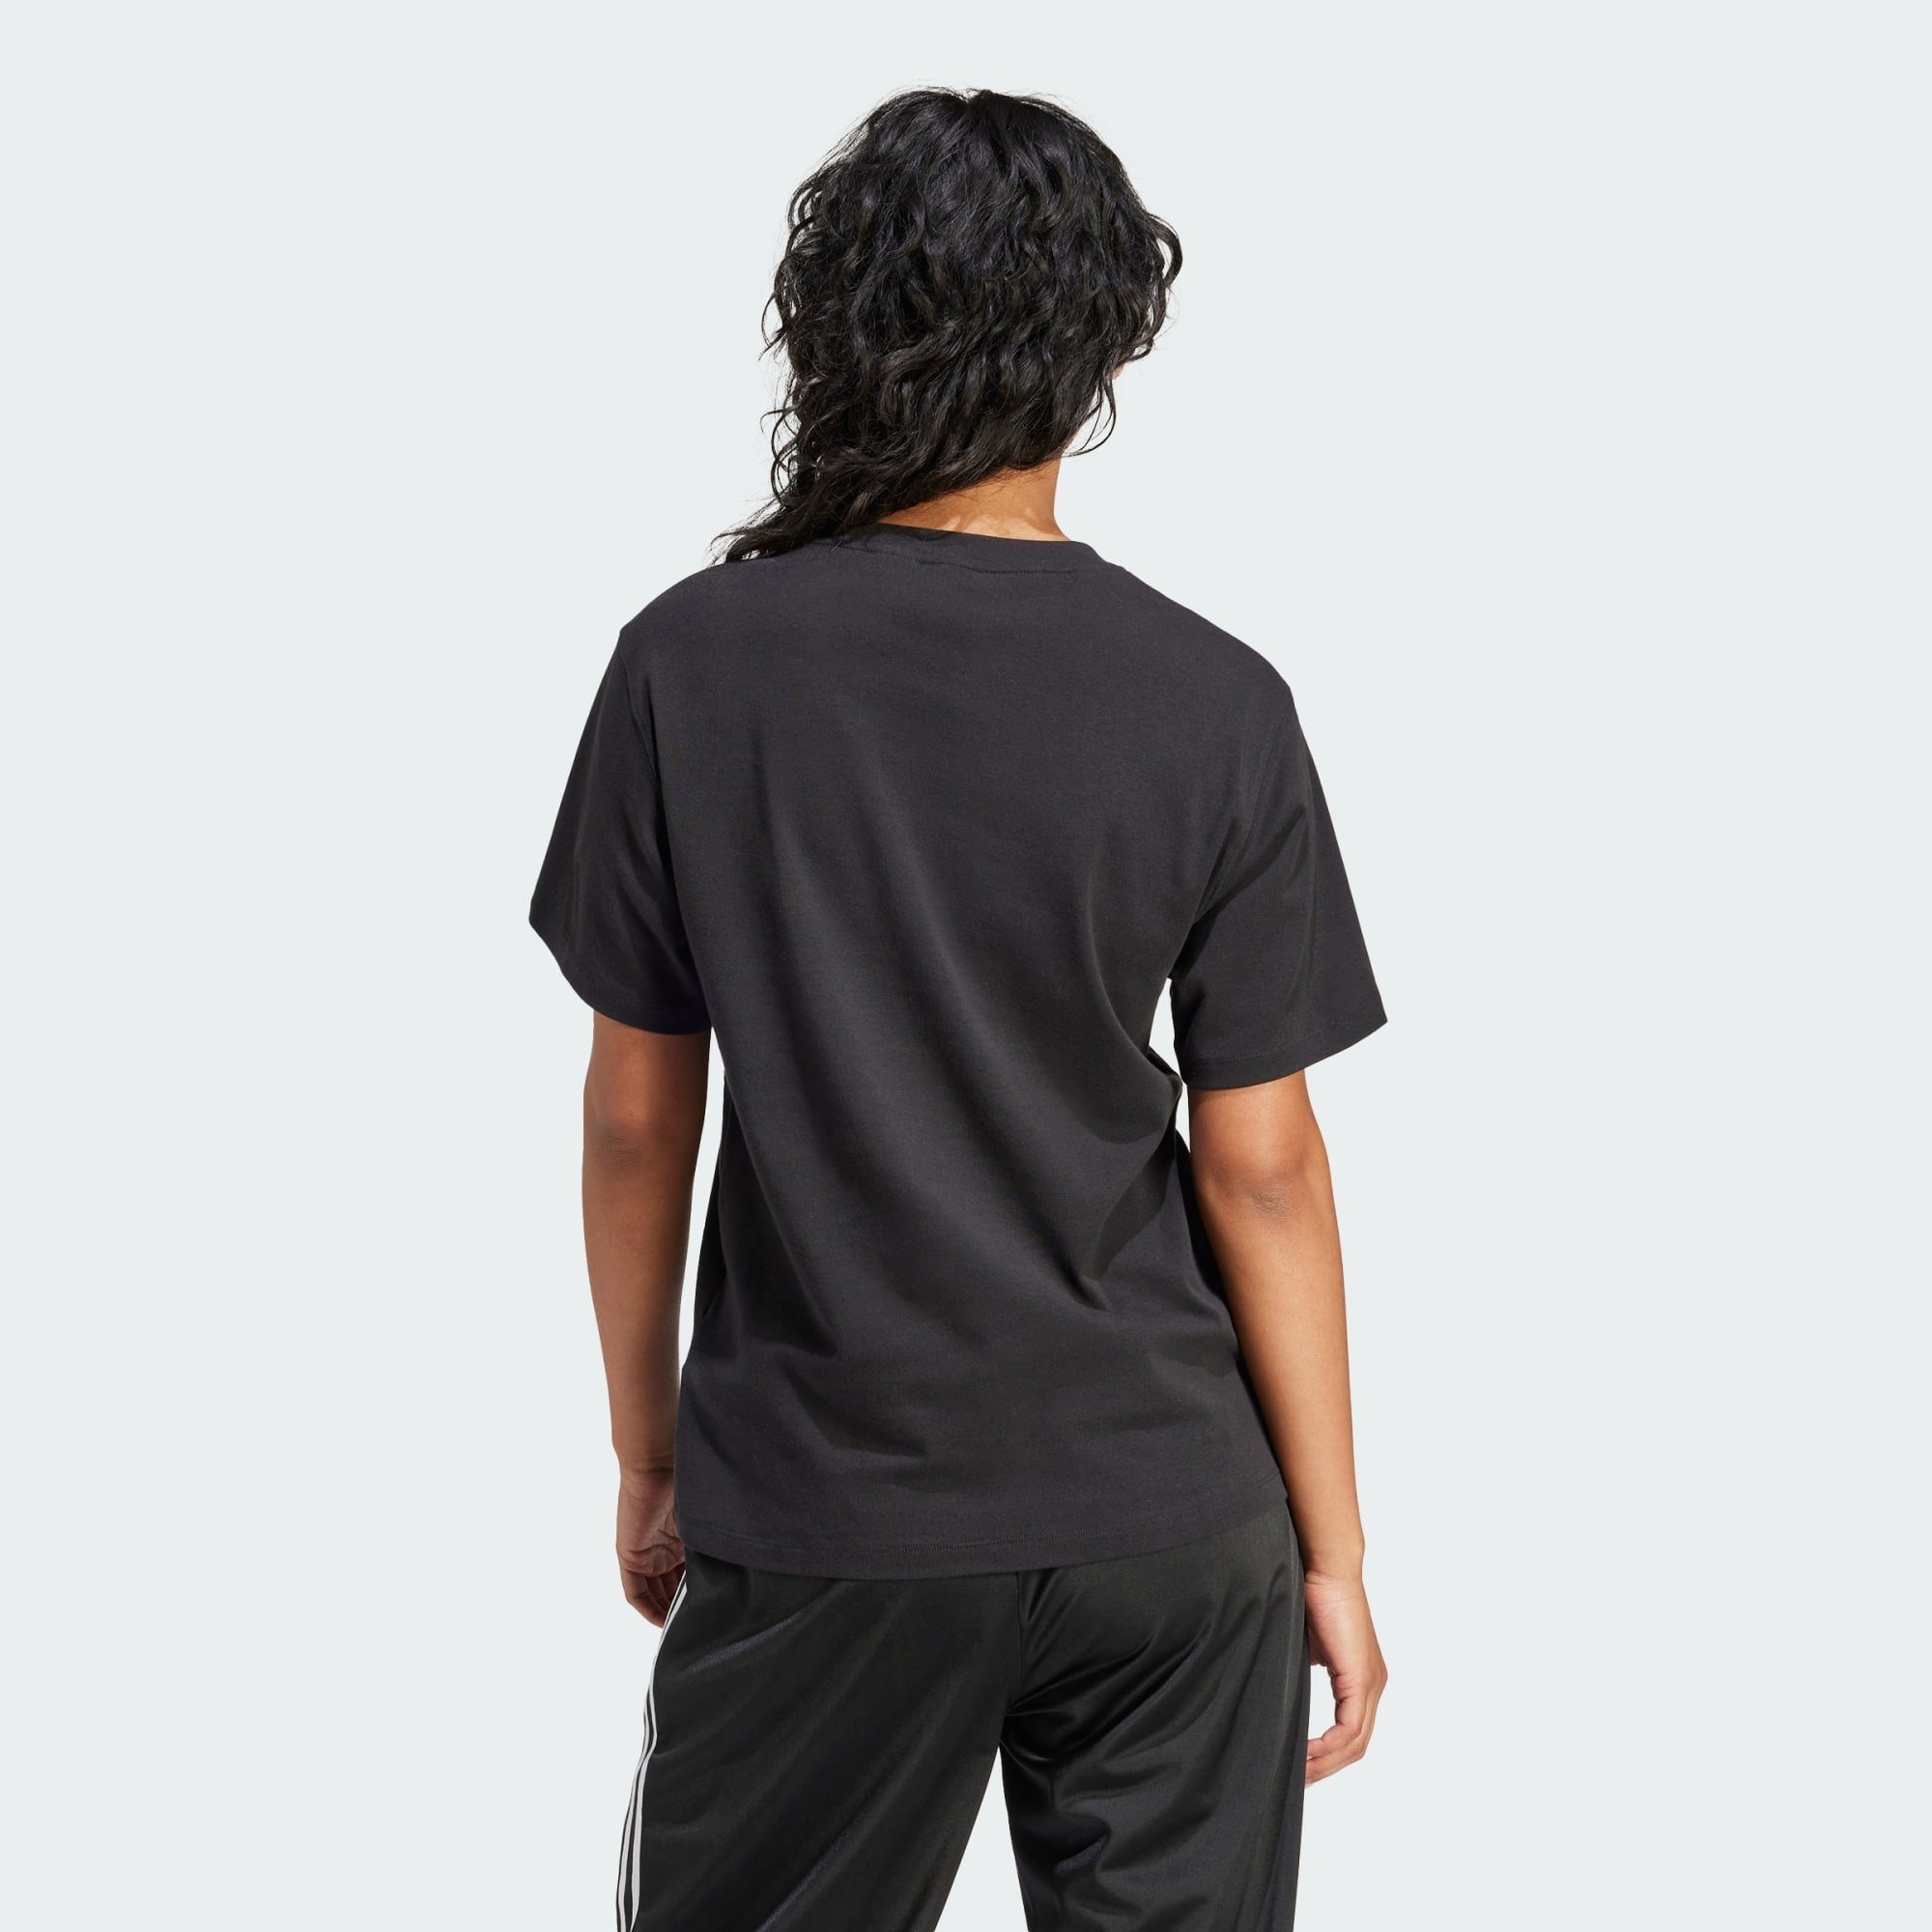 TREFOIL adidas Originals REGULAR Black T-Shirt T-SHIRT